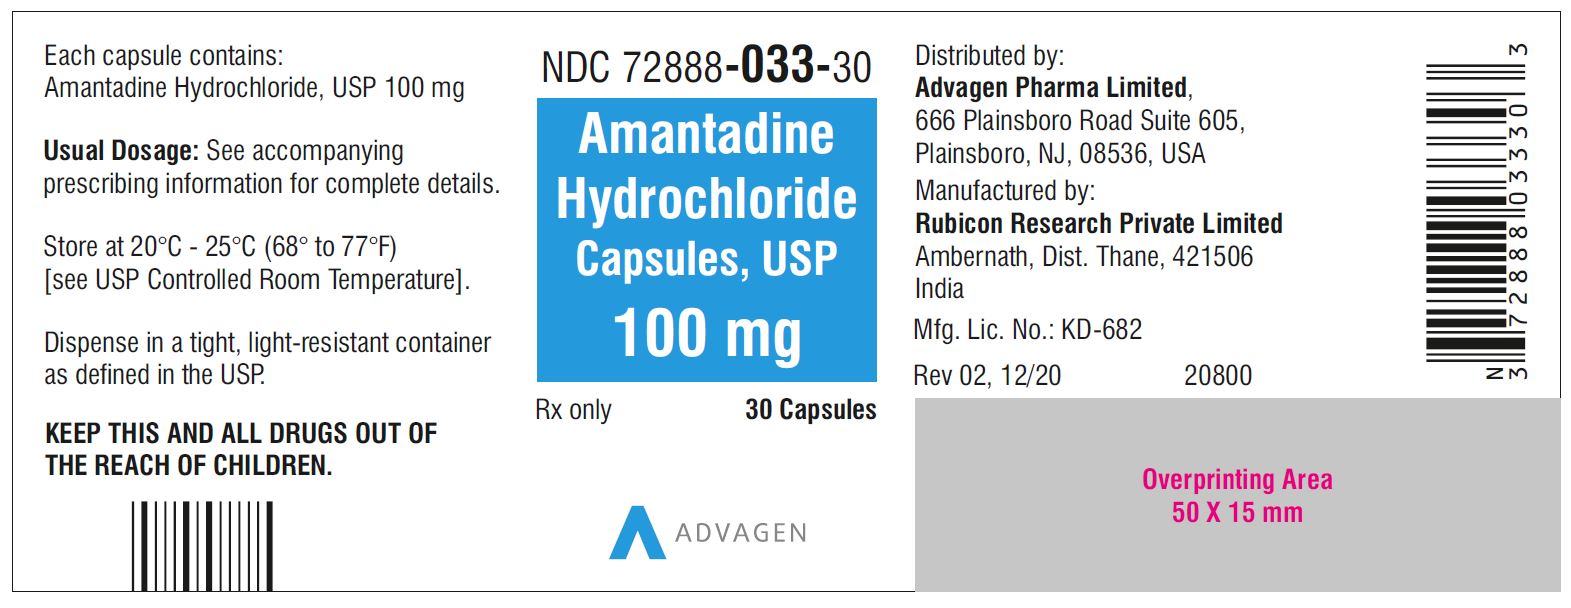 Amantadine Hydrochloride Cap, USP 100 mg - NDC-72888-033-30 - 30 Capsules